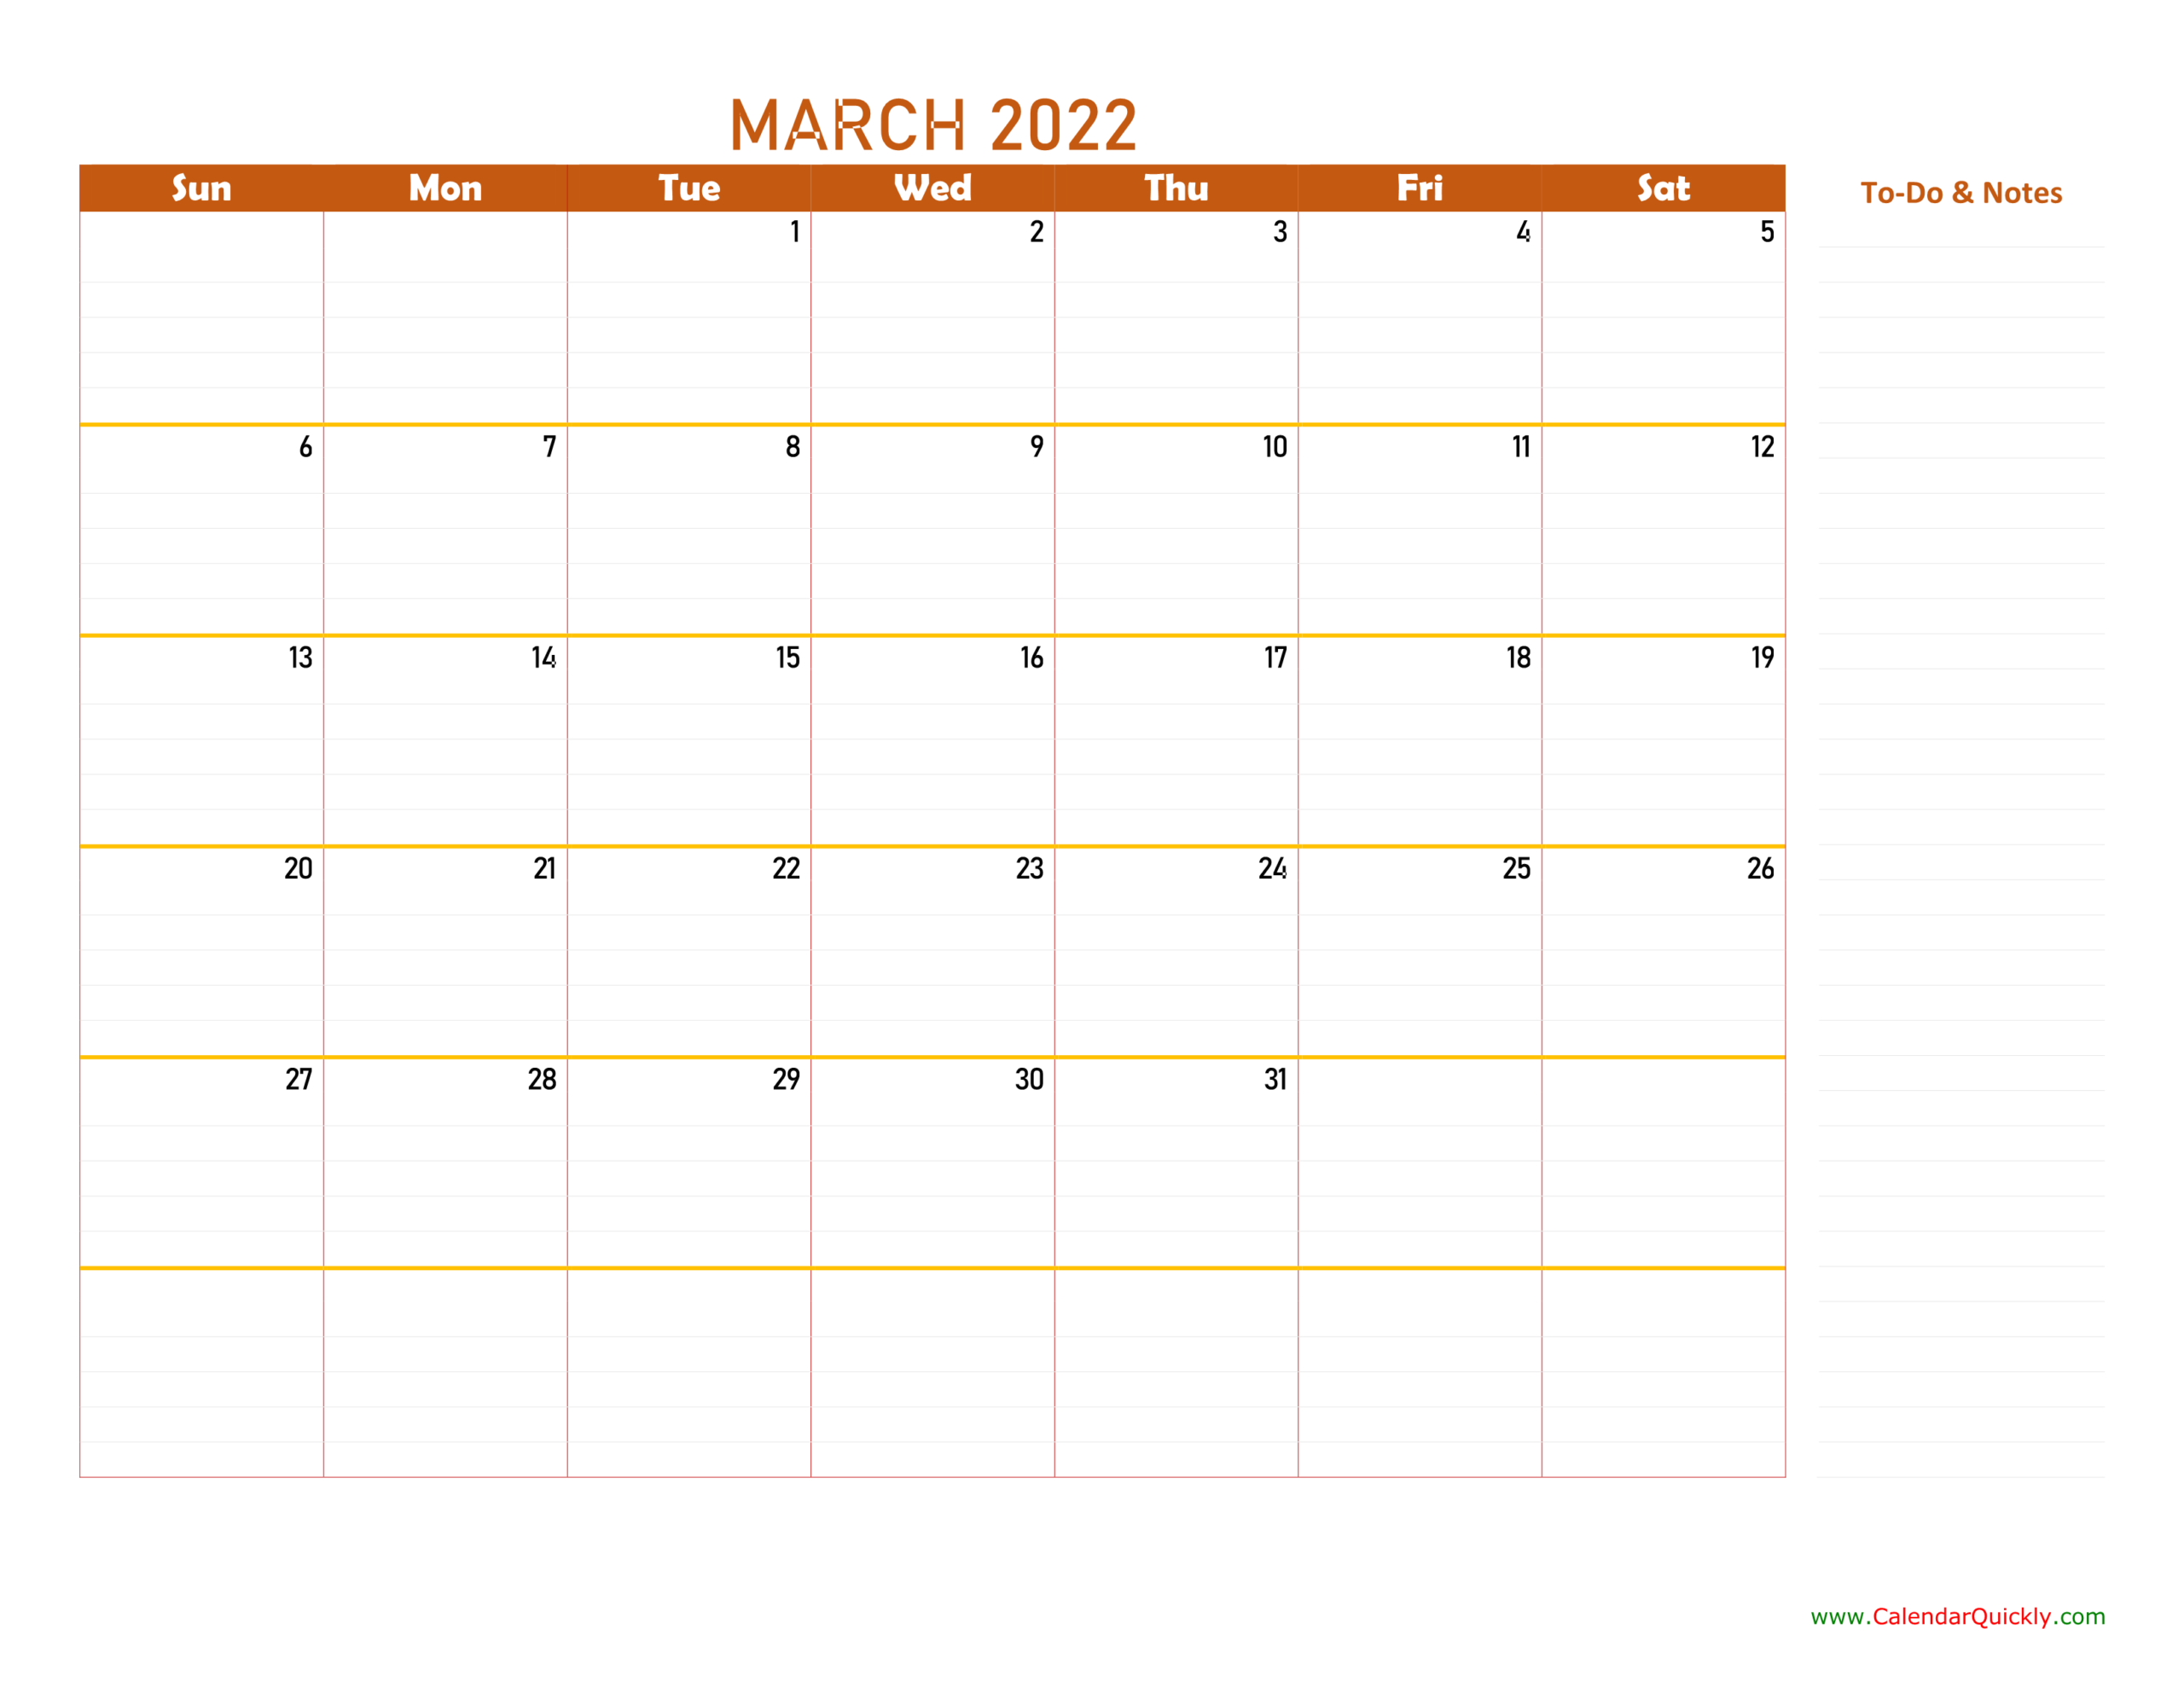 March 2022 Calendar | Calendar Quickly  Calendar February March April 2022